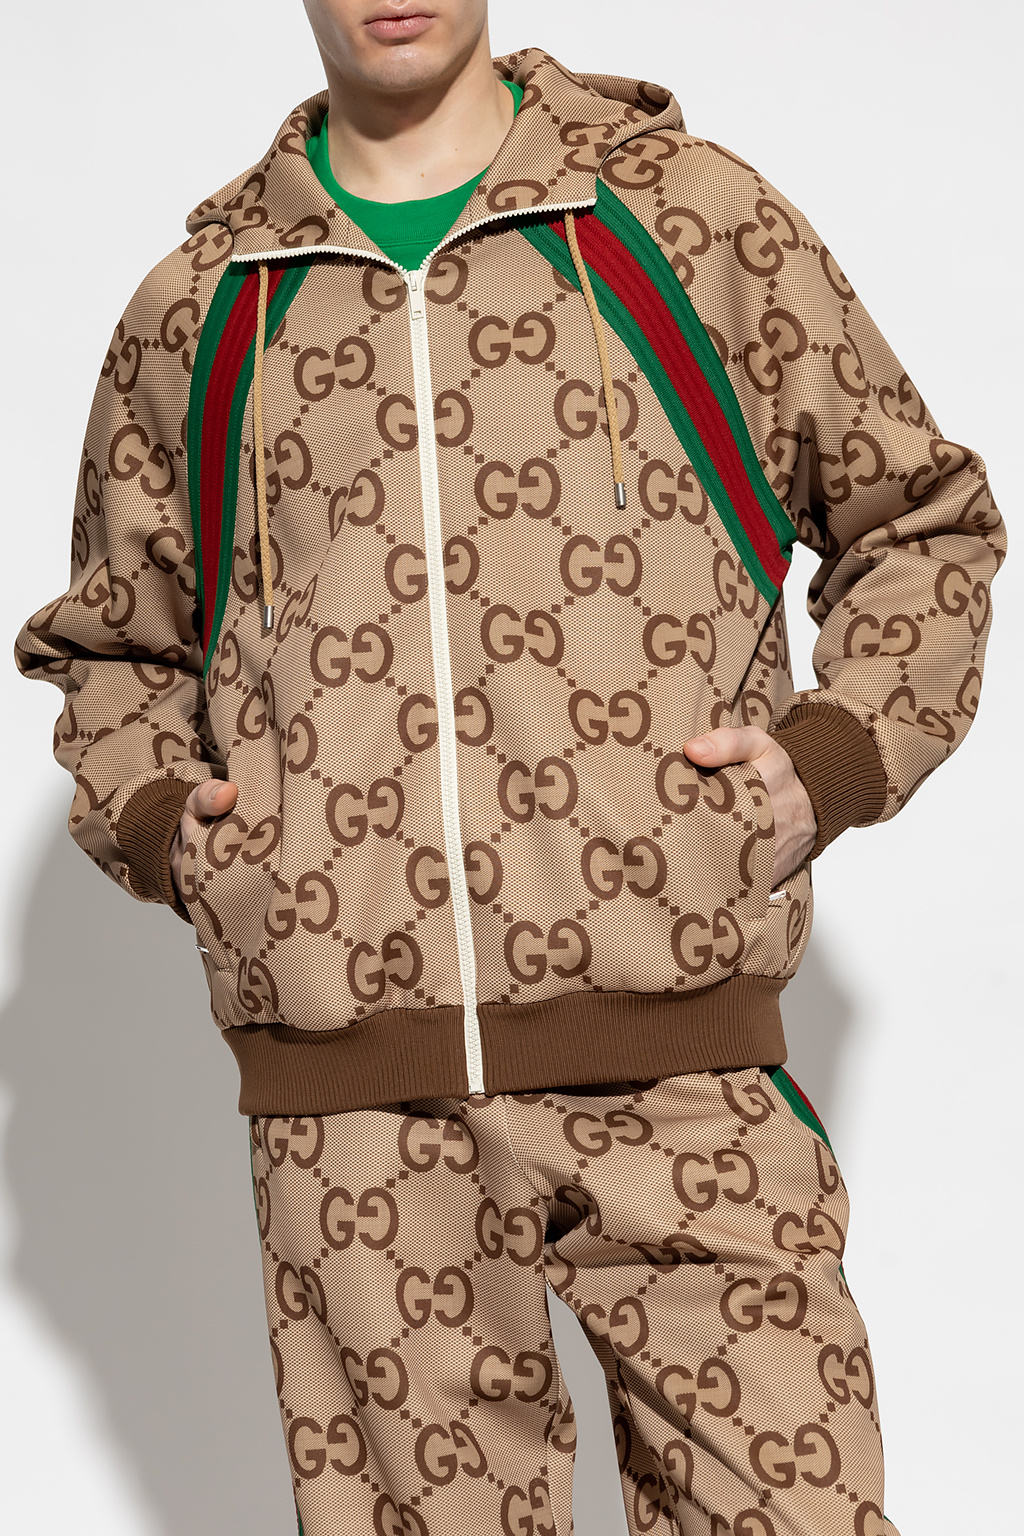 Gucci Logo Torn Ripped Brown Monogram Hoodie - Tagotee